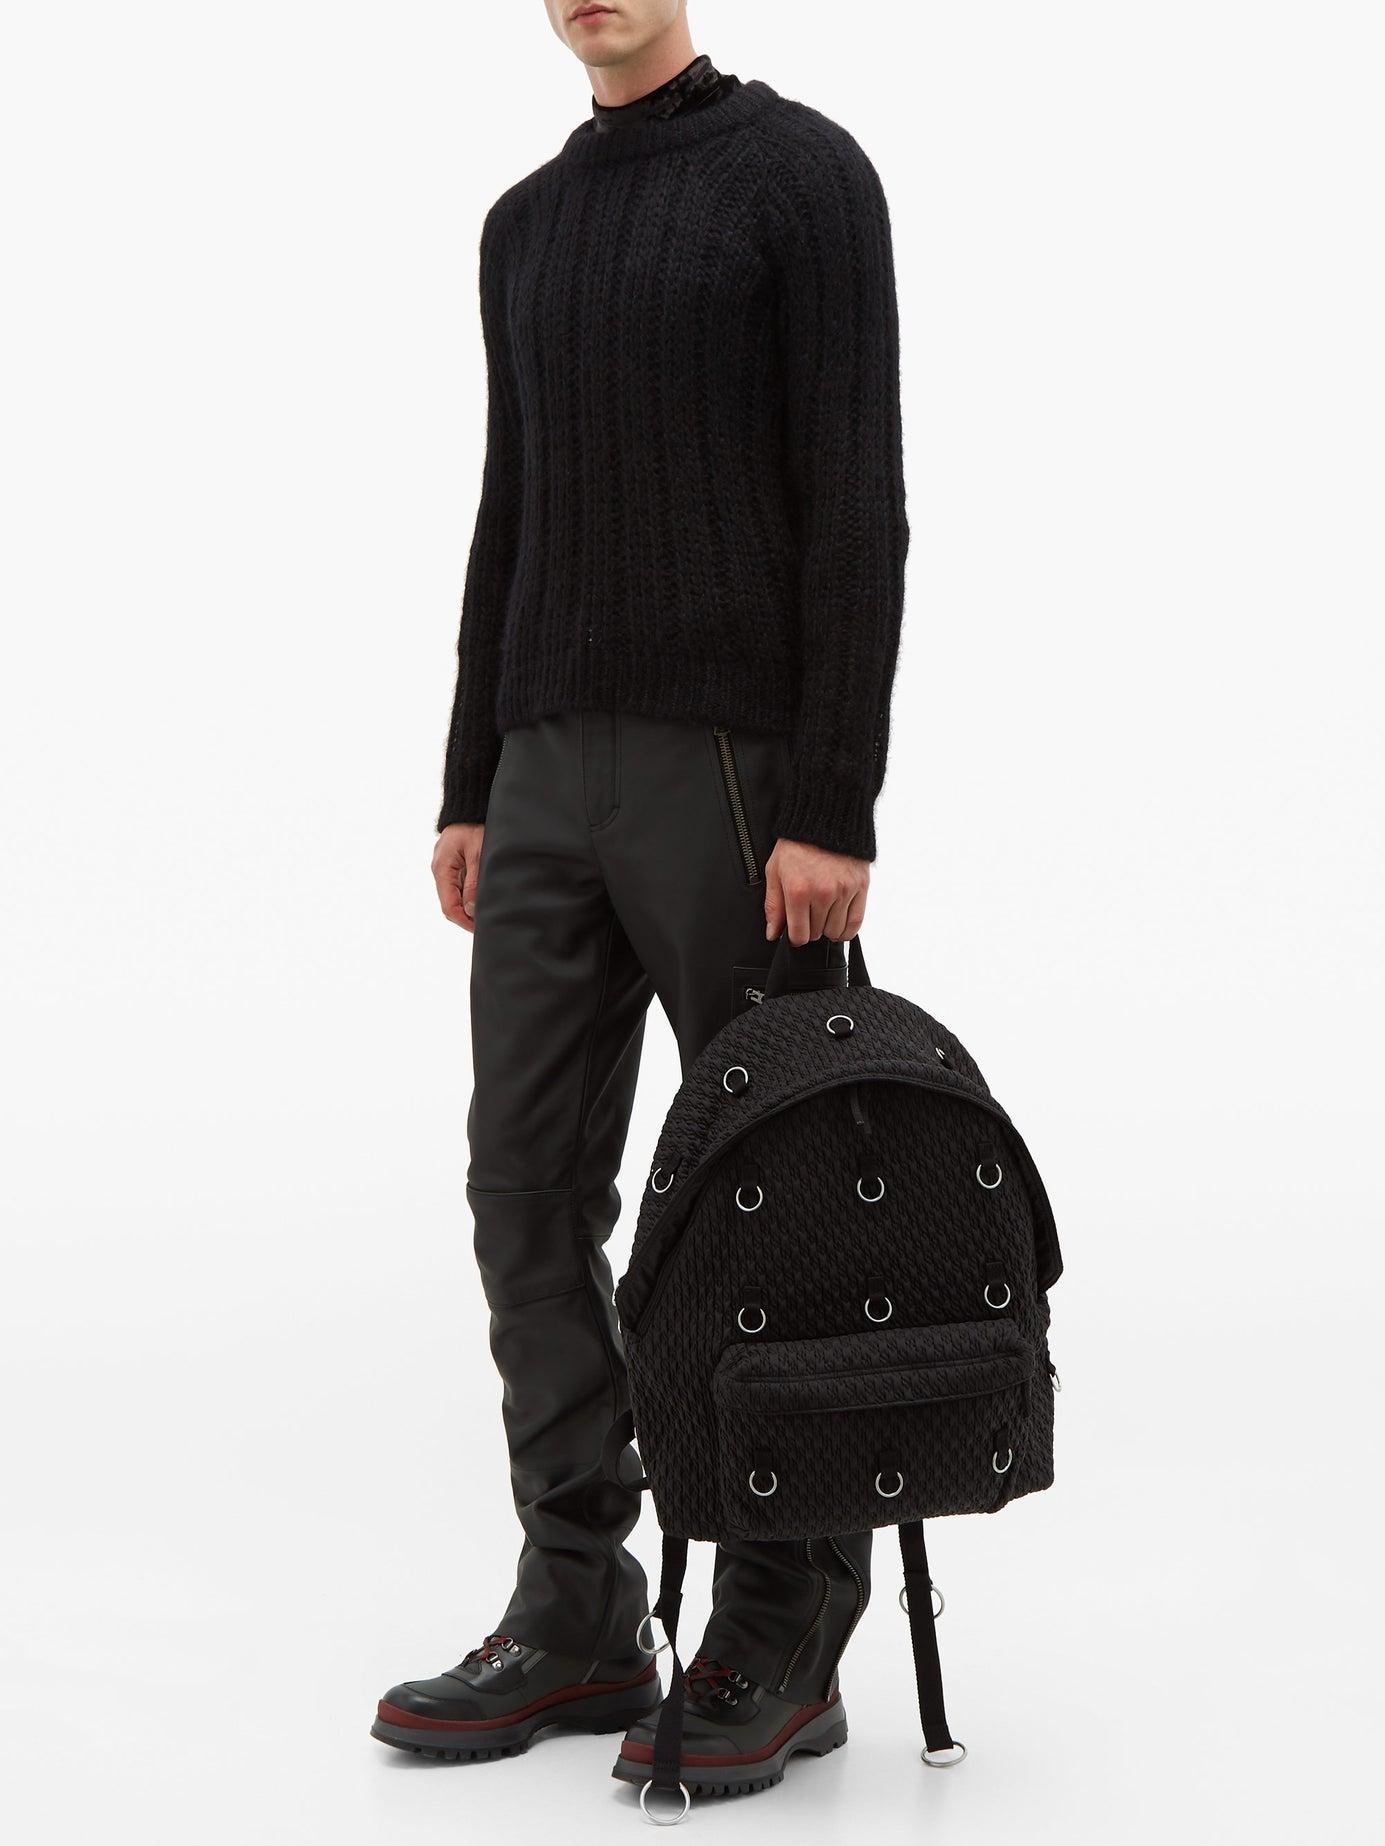 Eastpak X Raf Simons Patterned Ring Backpack in Black for Men | Lyst